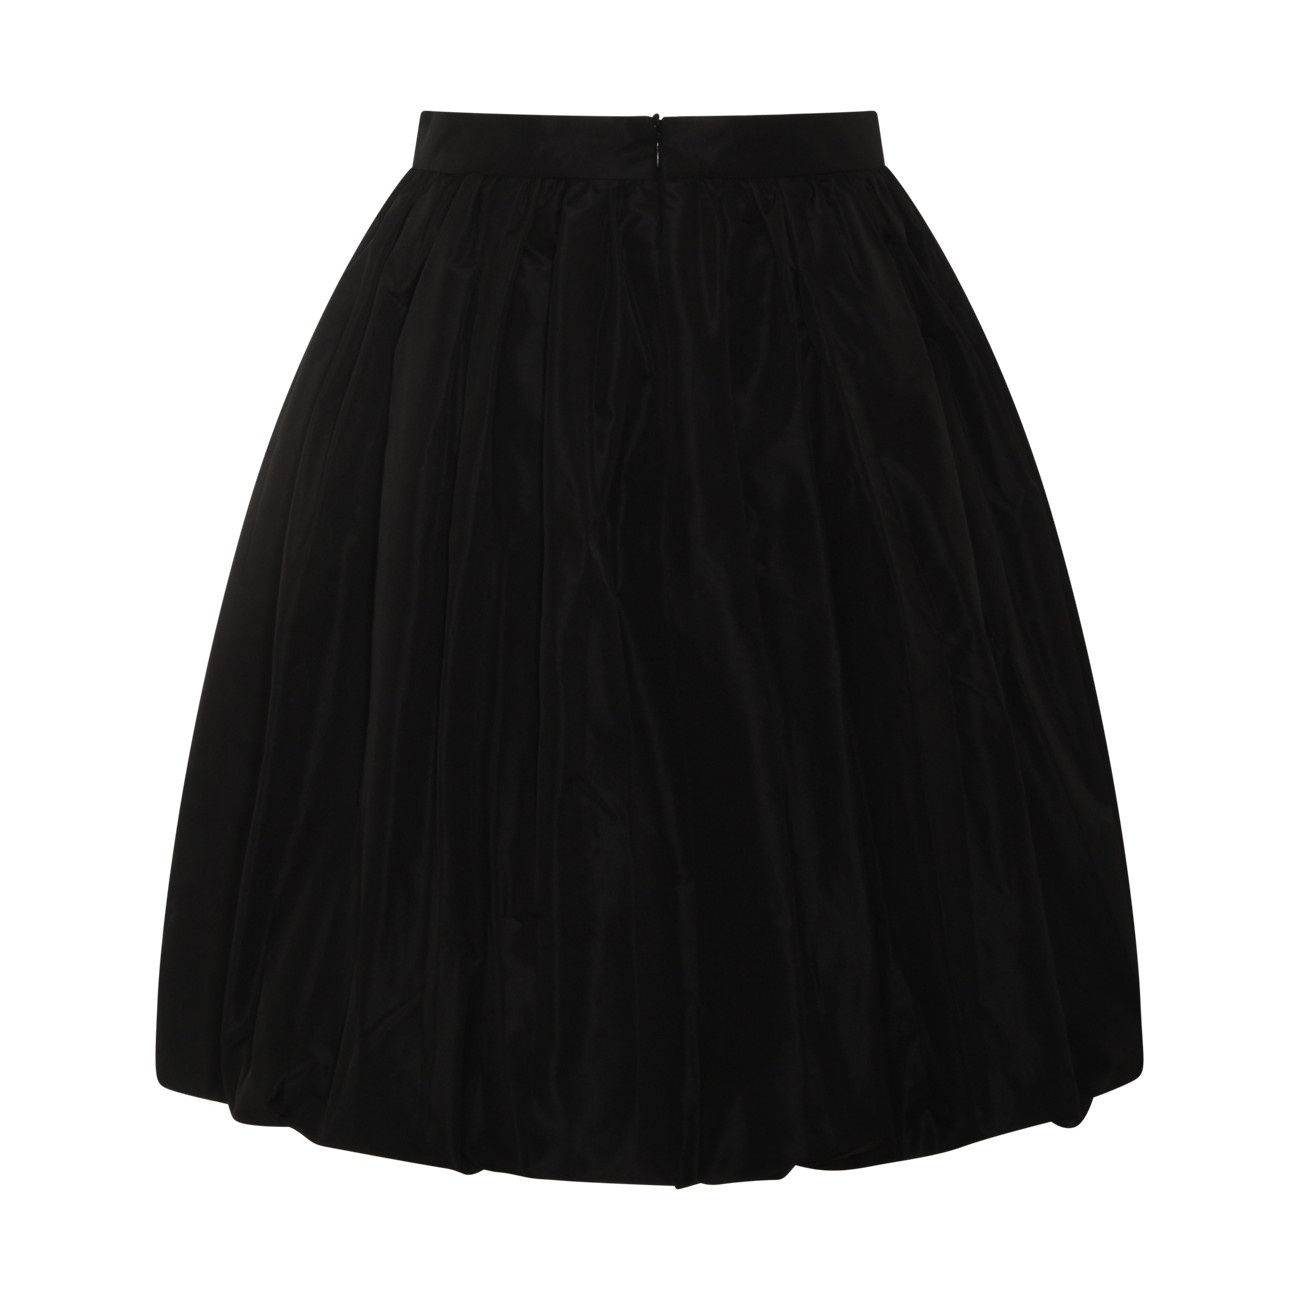 black midi skirt - 2